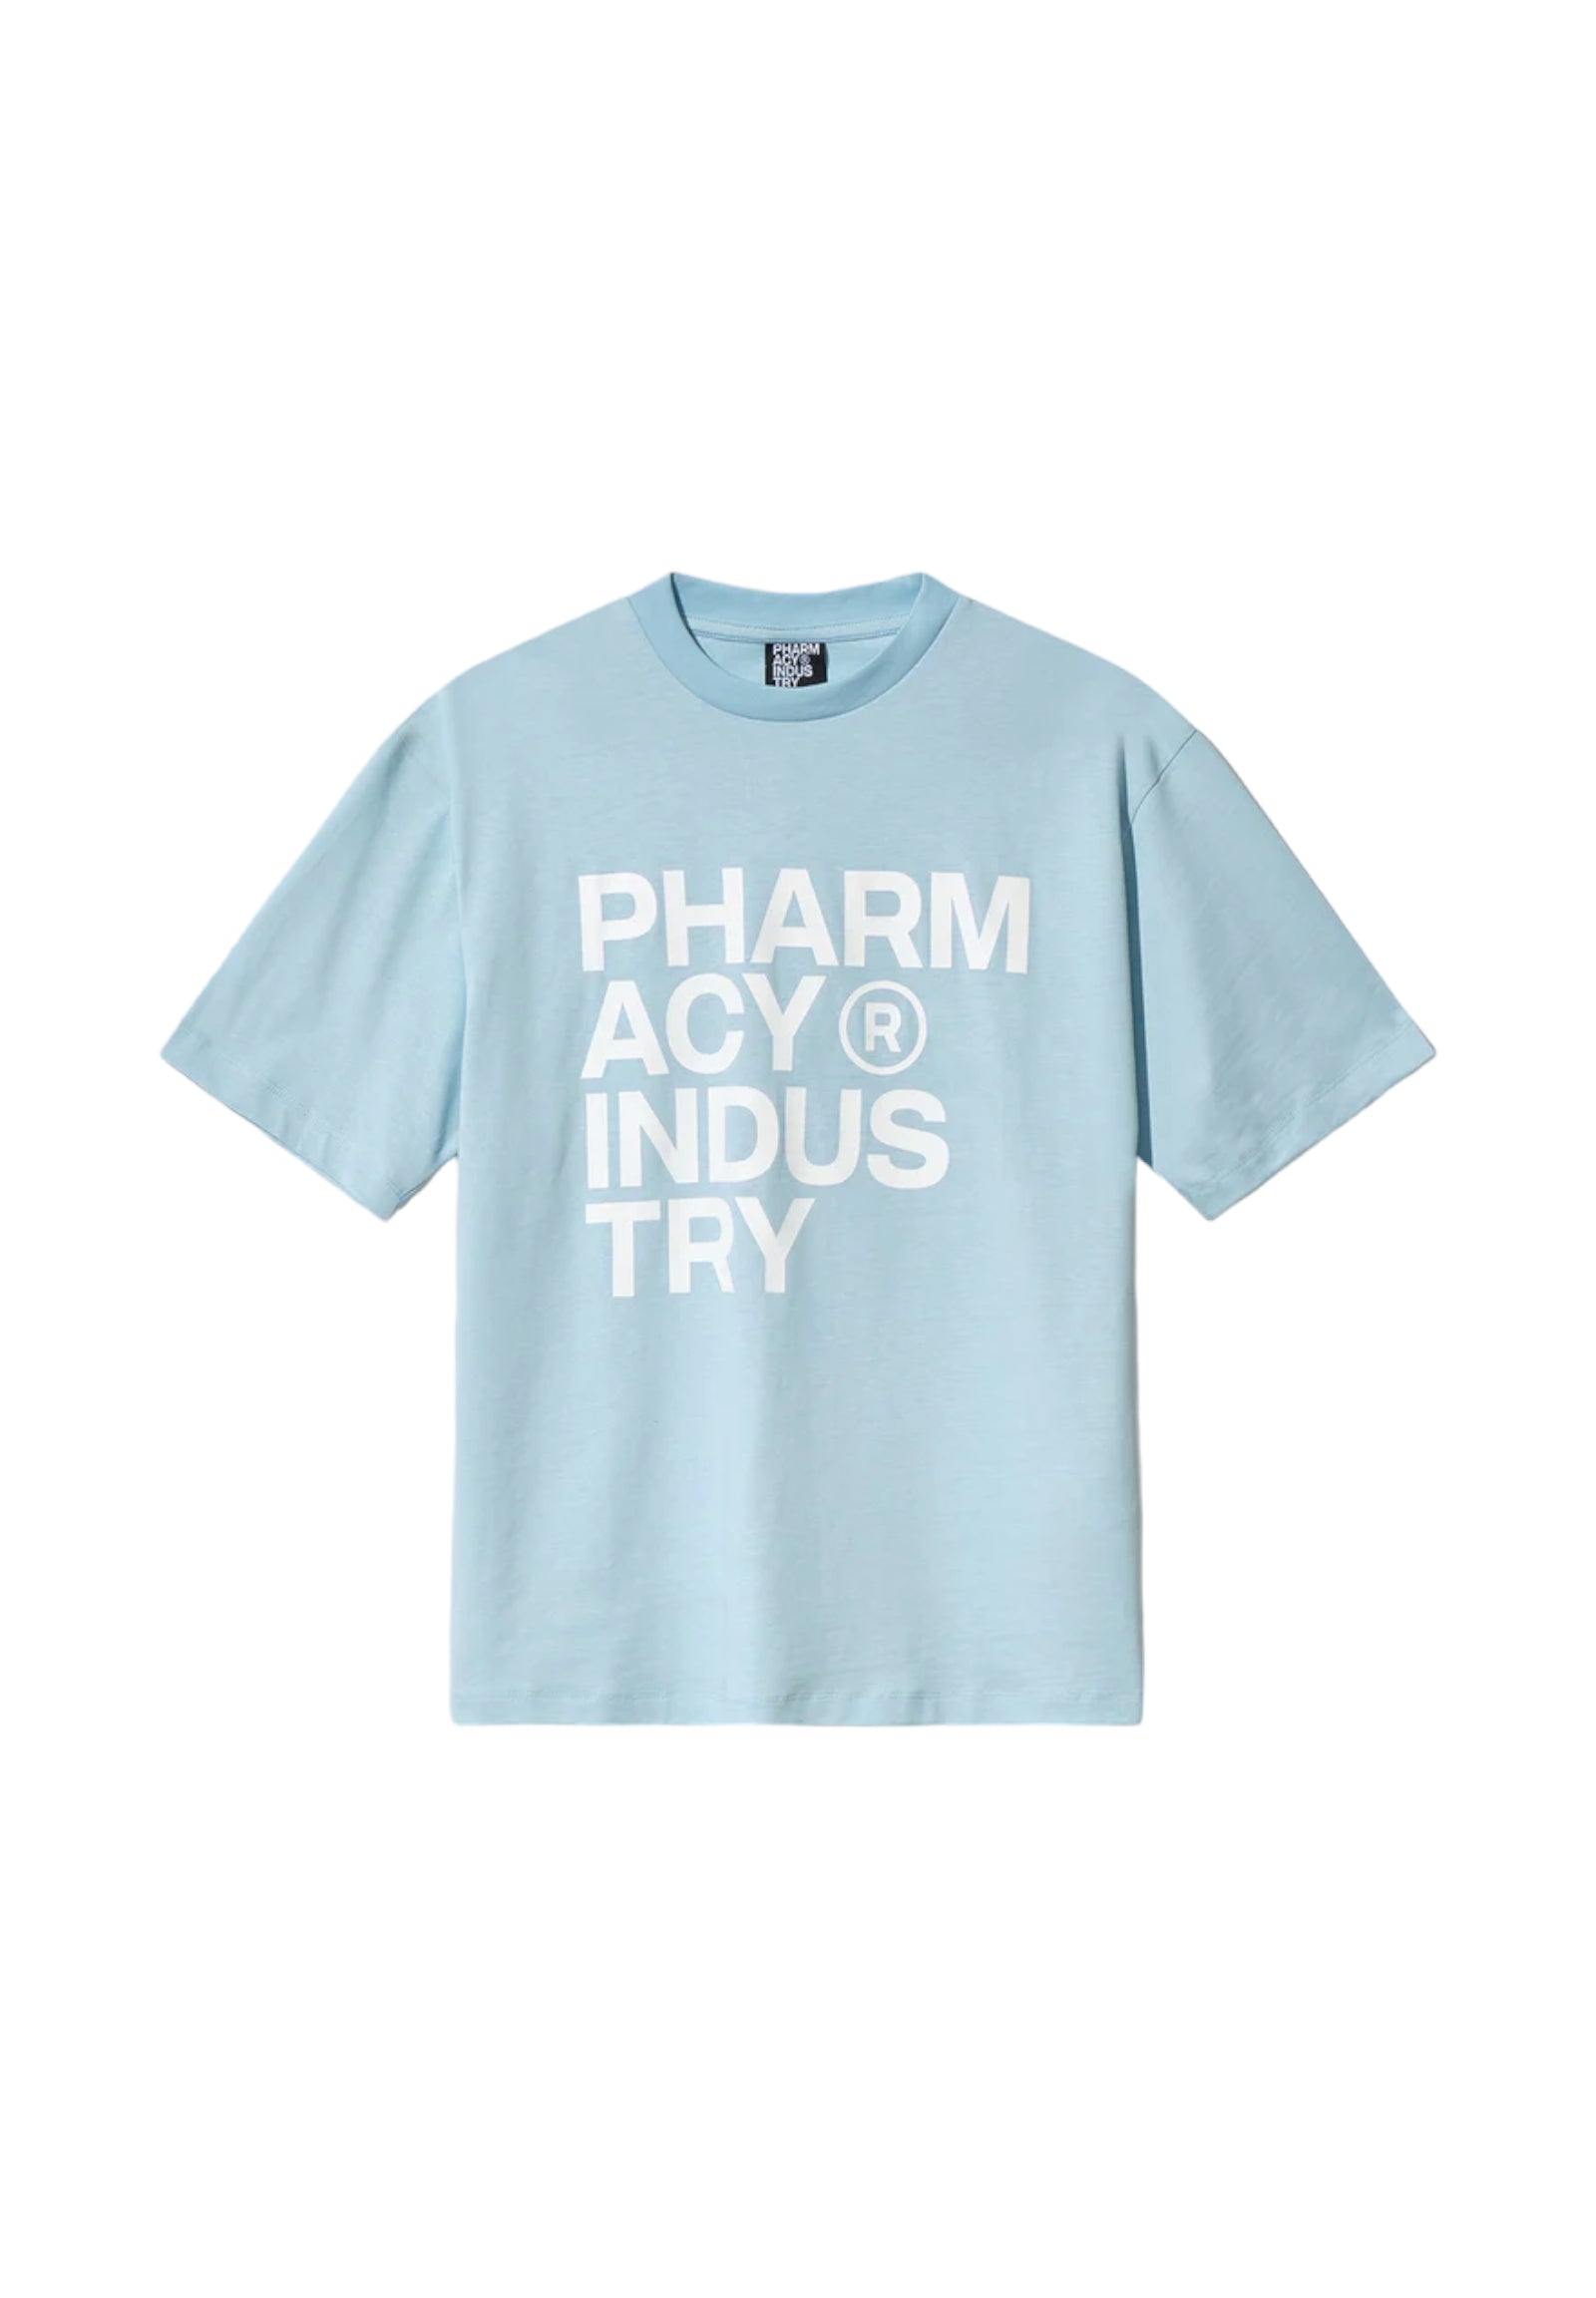 Pharmacy Industry T-Shirt A Maniche Corte Phabm00003 Acqua